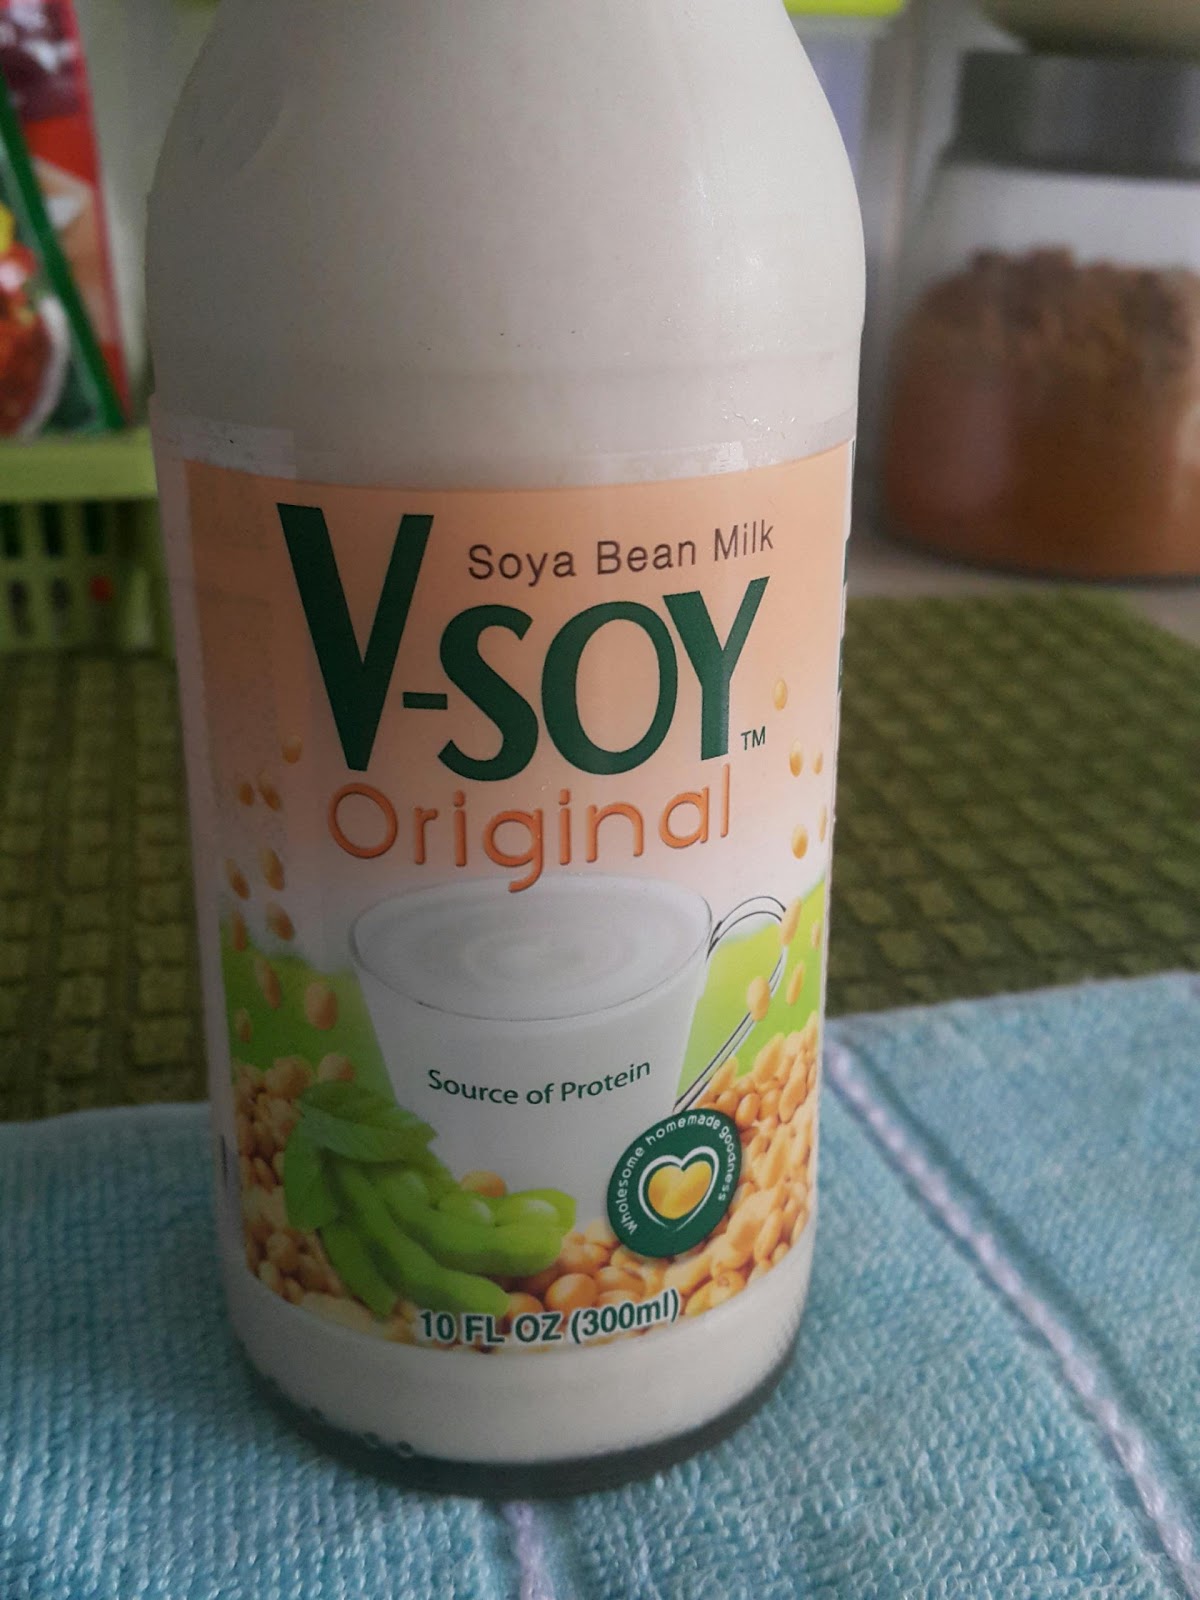 Cerita Yna: Susu Kacang Soya V Soy, Terbaik!